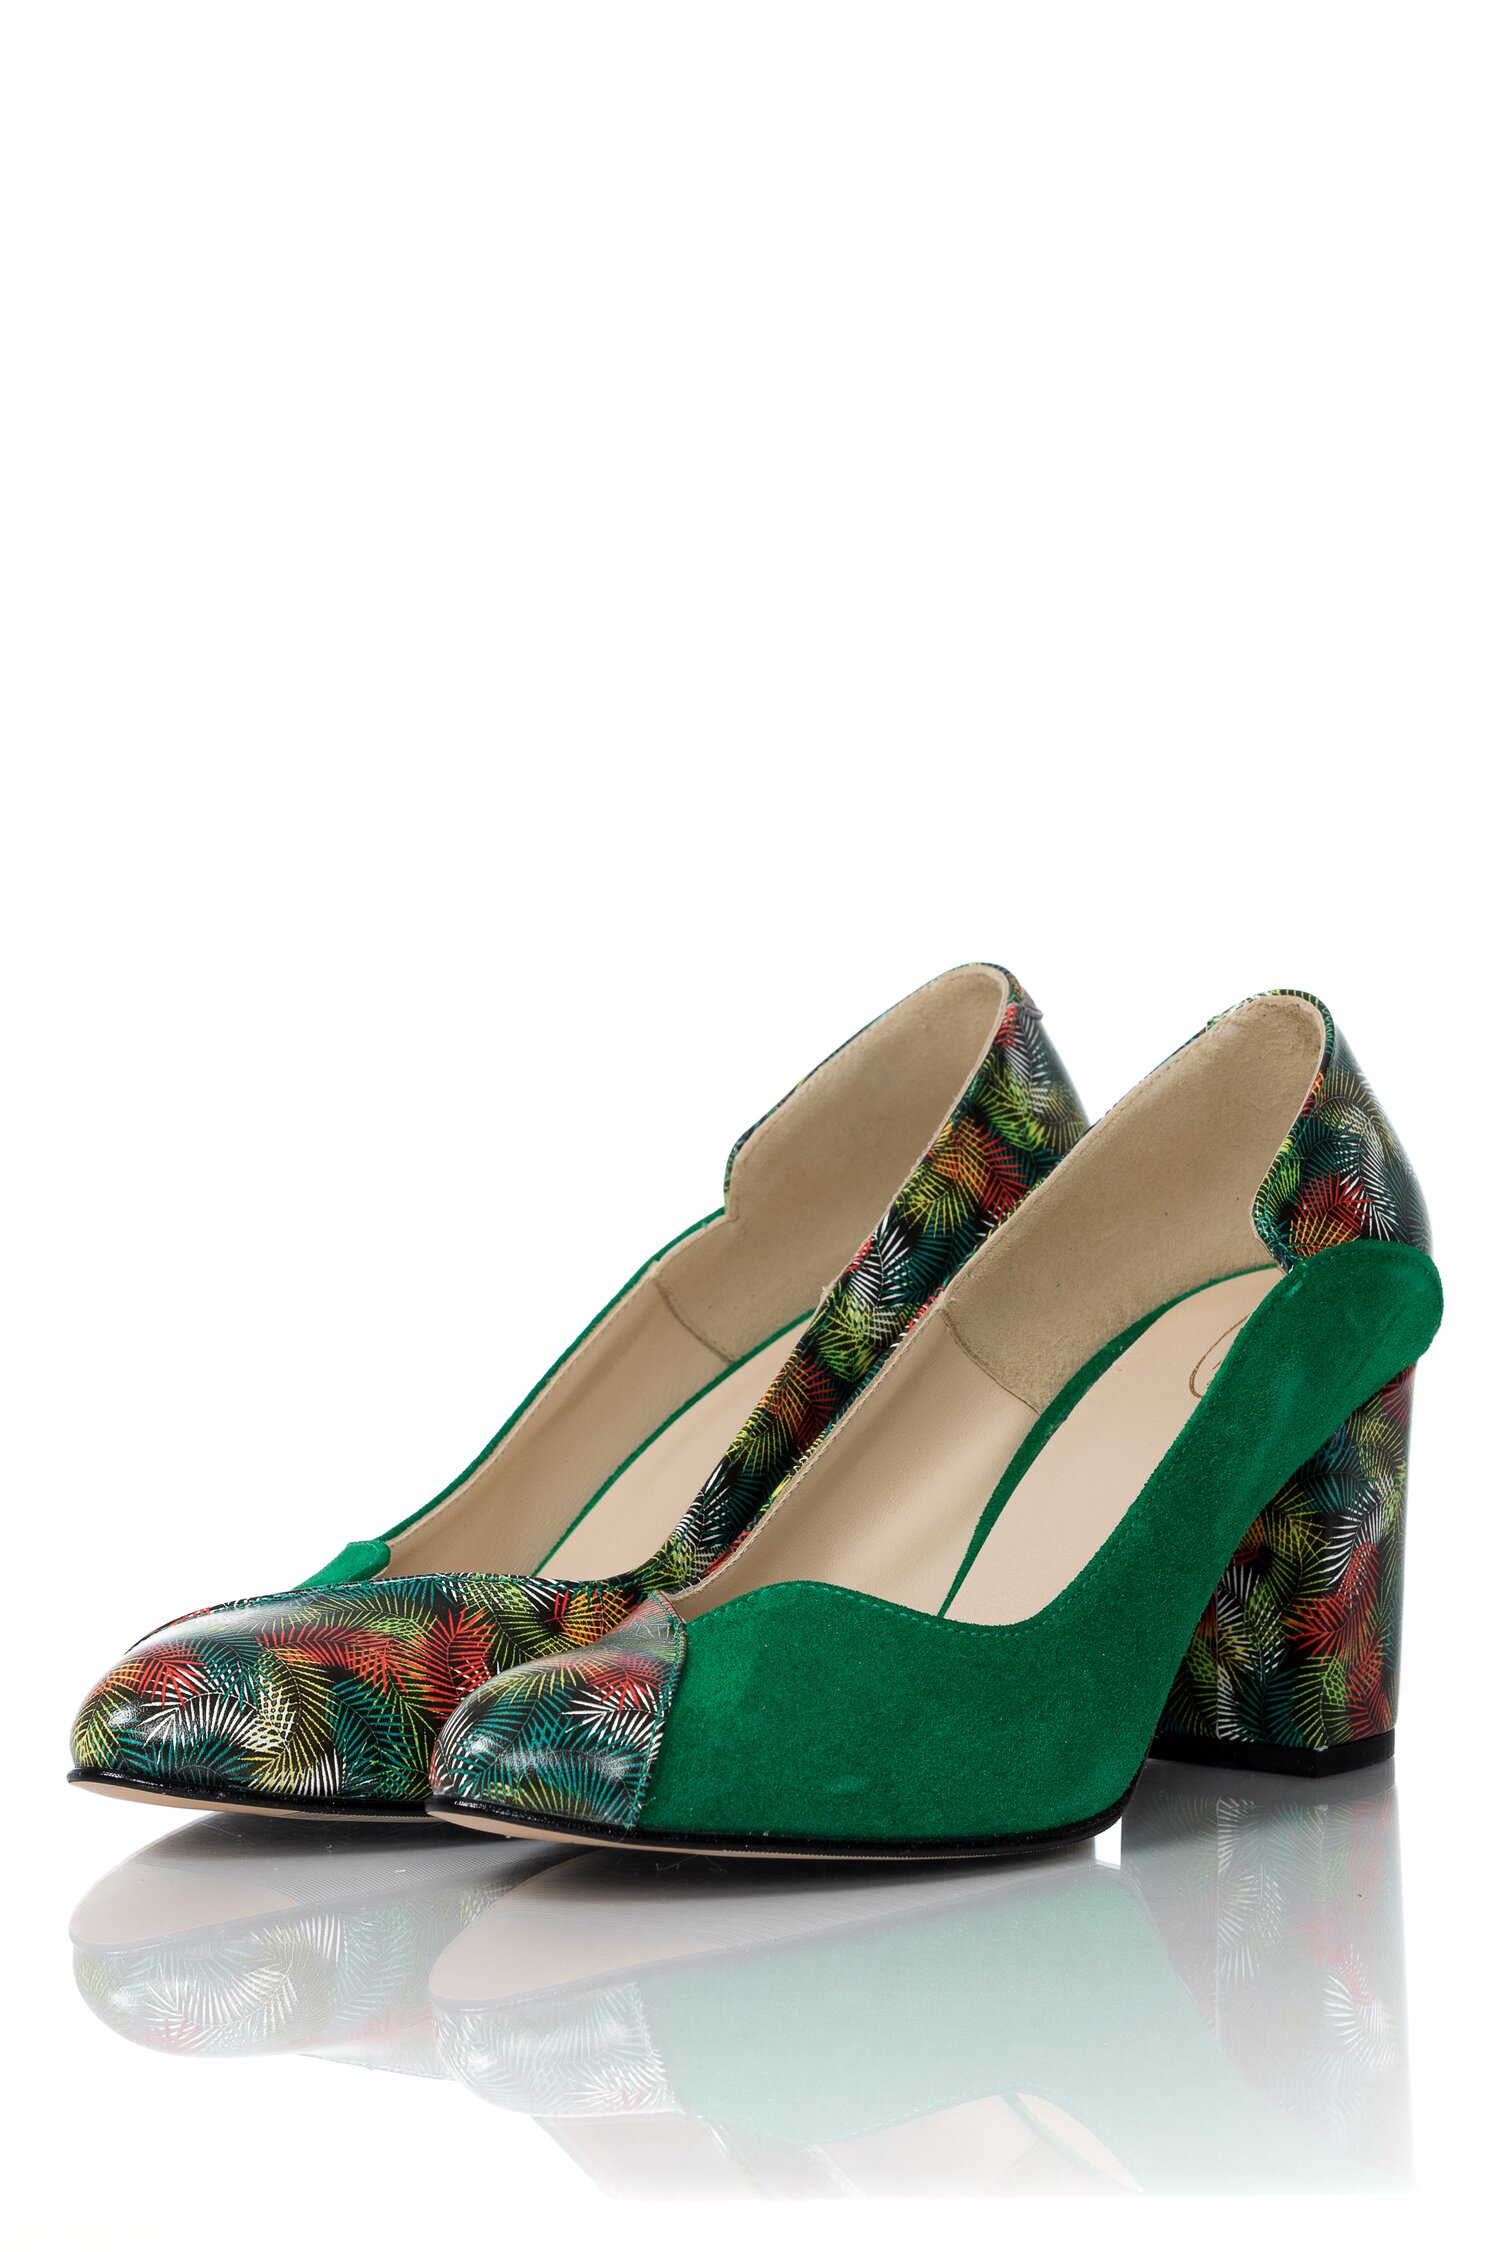 Pantofi Mara verzi cu imprimeu floral pret ieftin